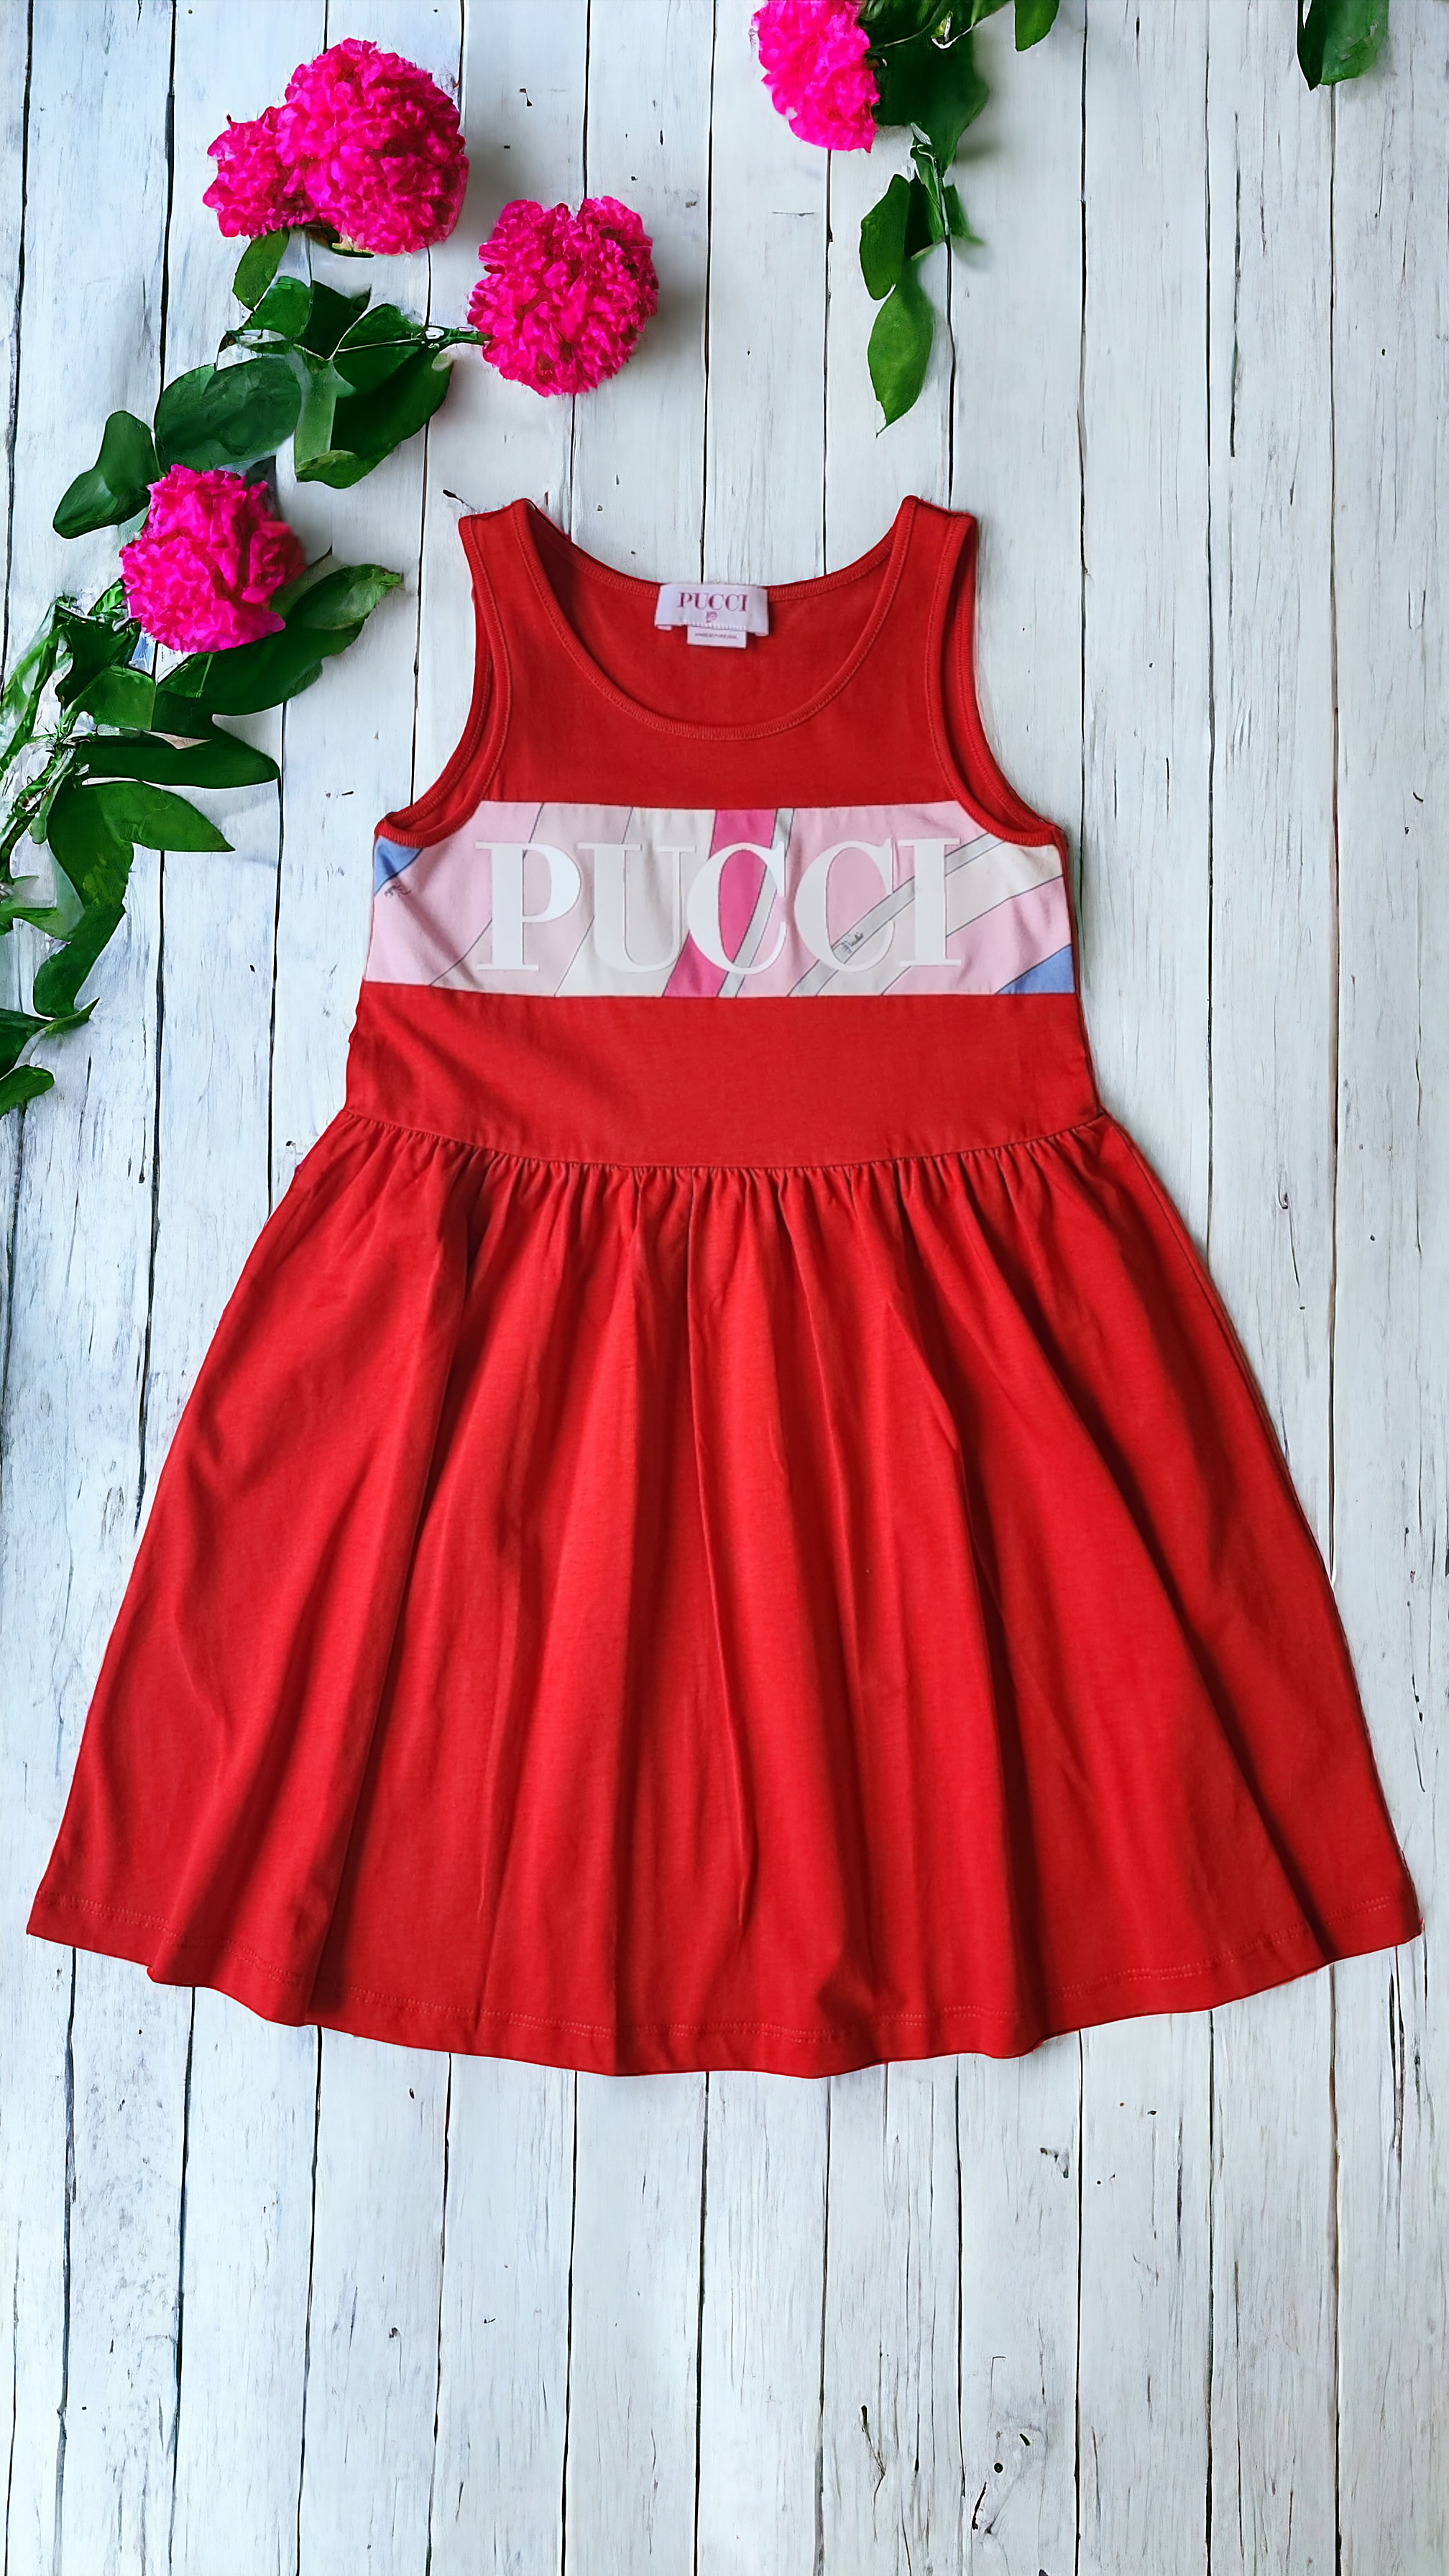 Pucci Red Jersey Dress